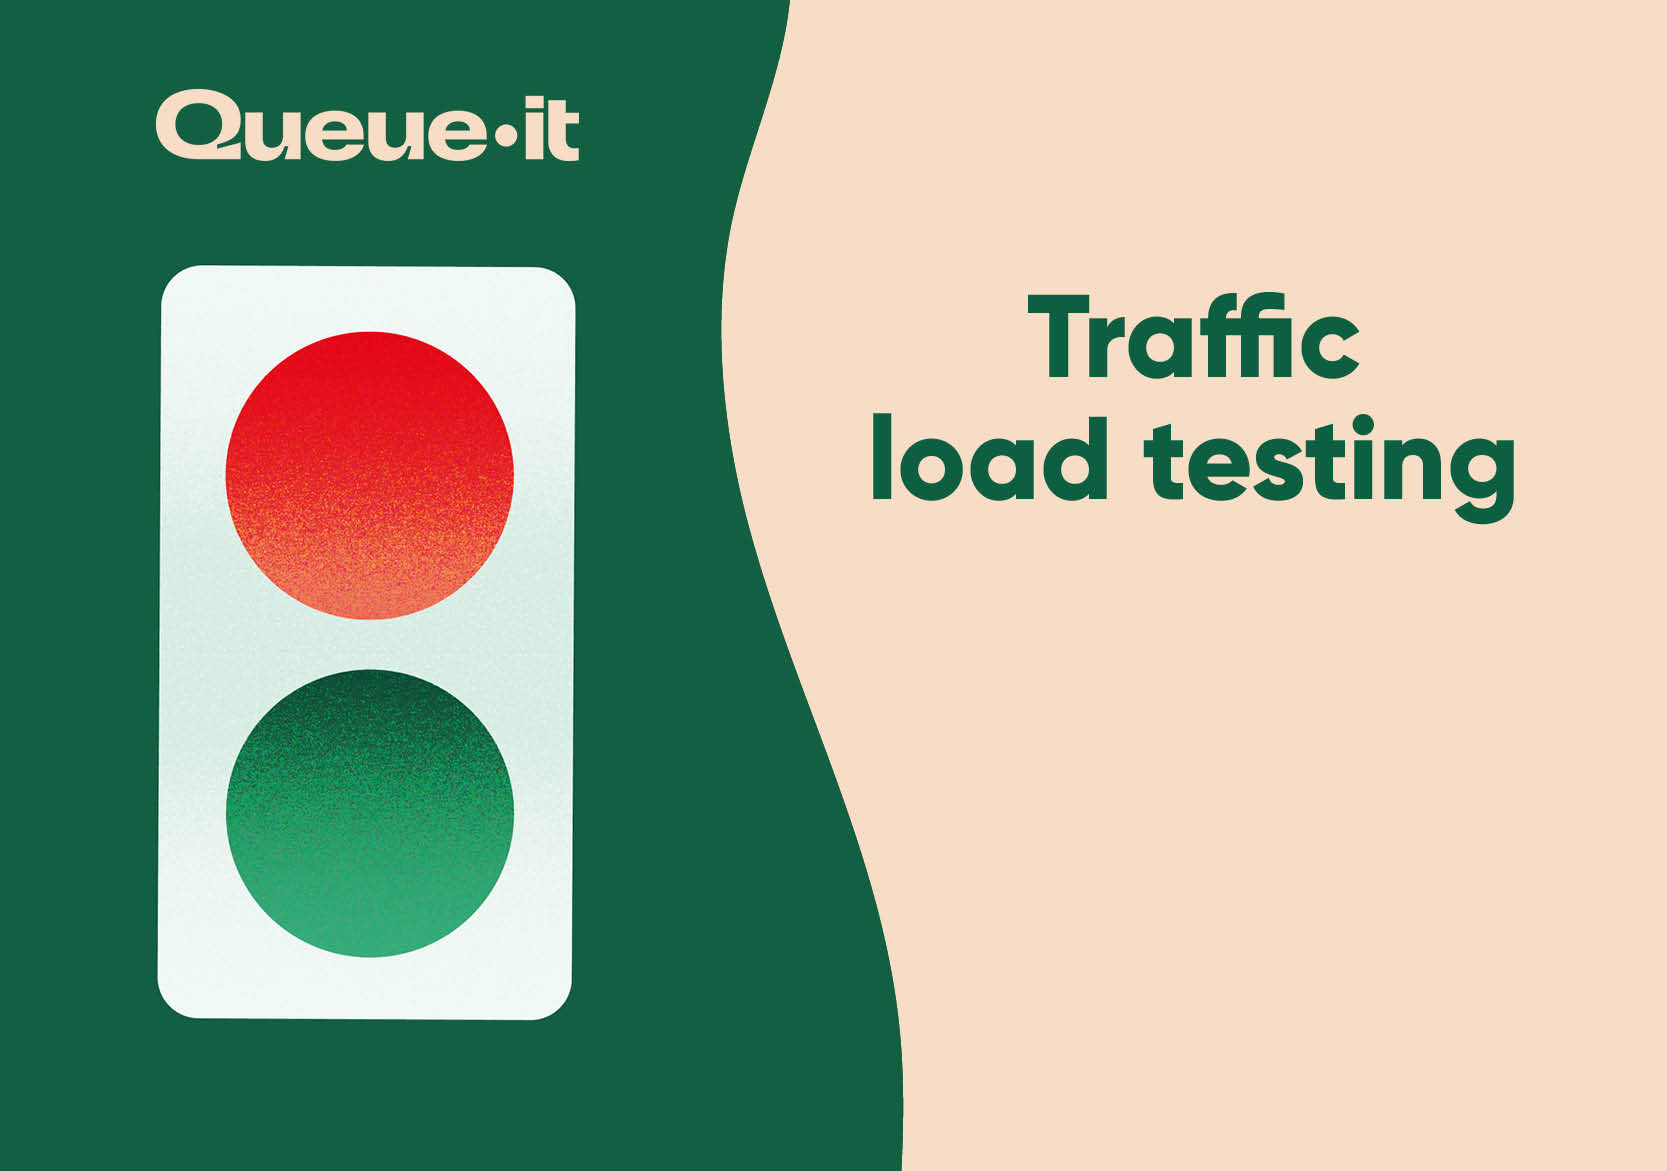 Queue-it Traffic Load Testing hite paper